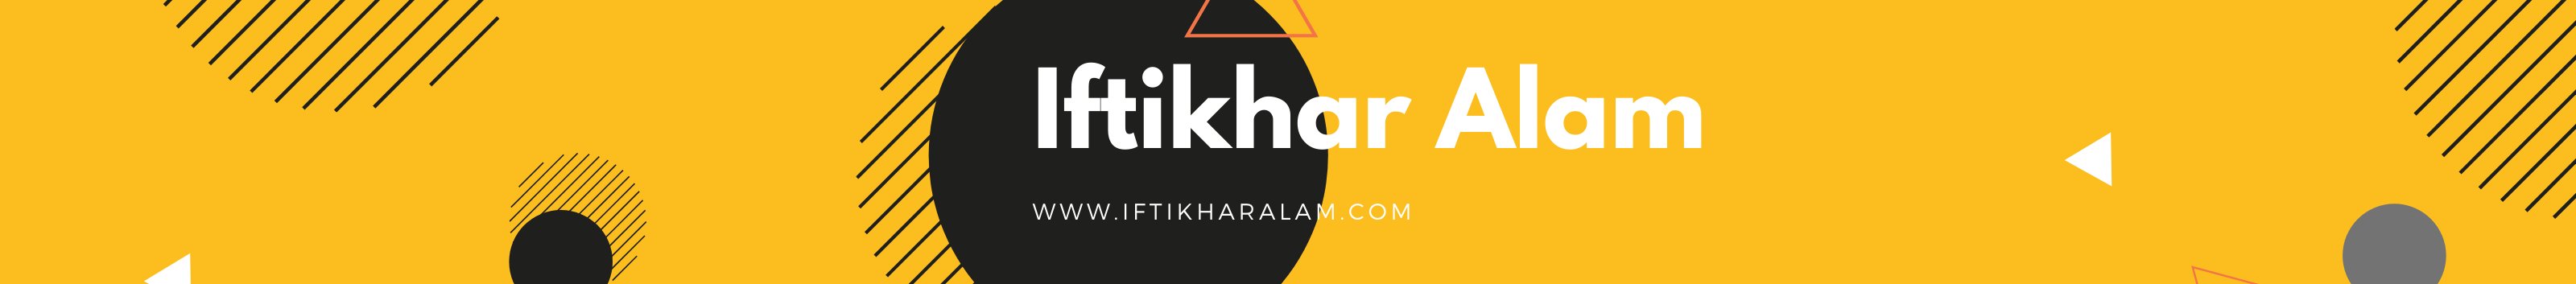 Iftikhar Alam's profile banner